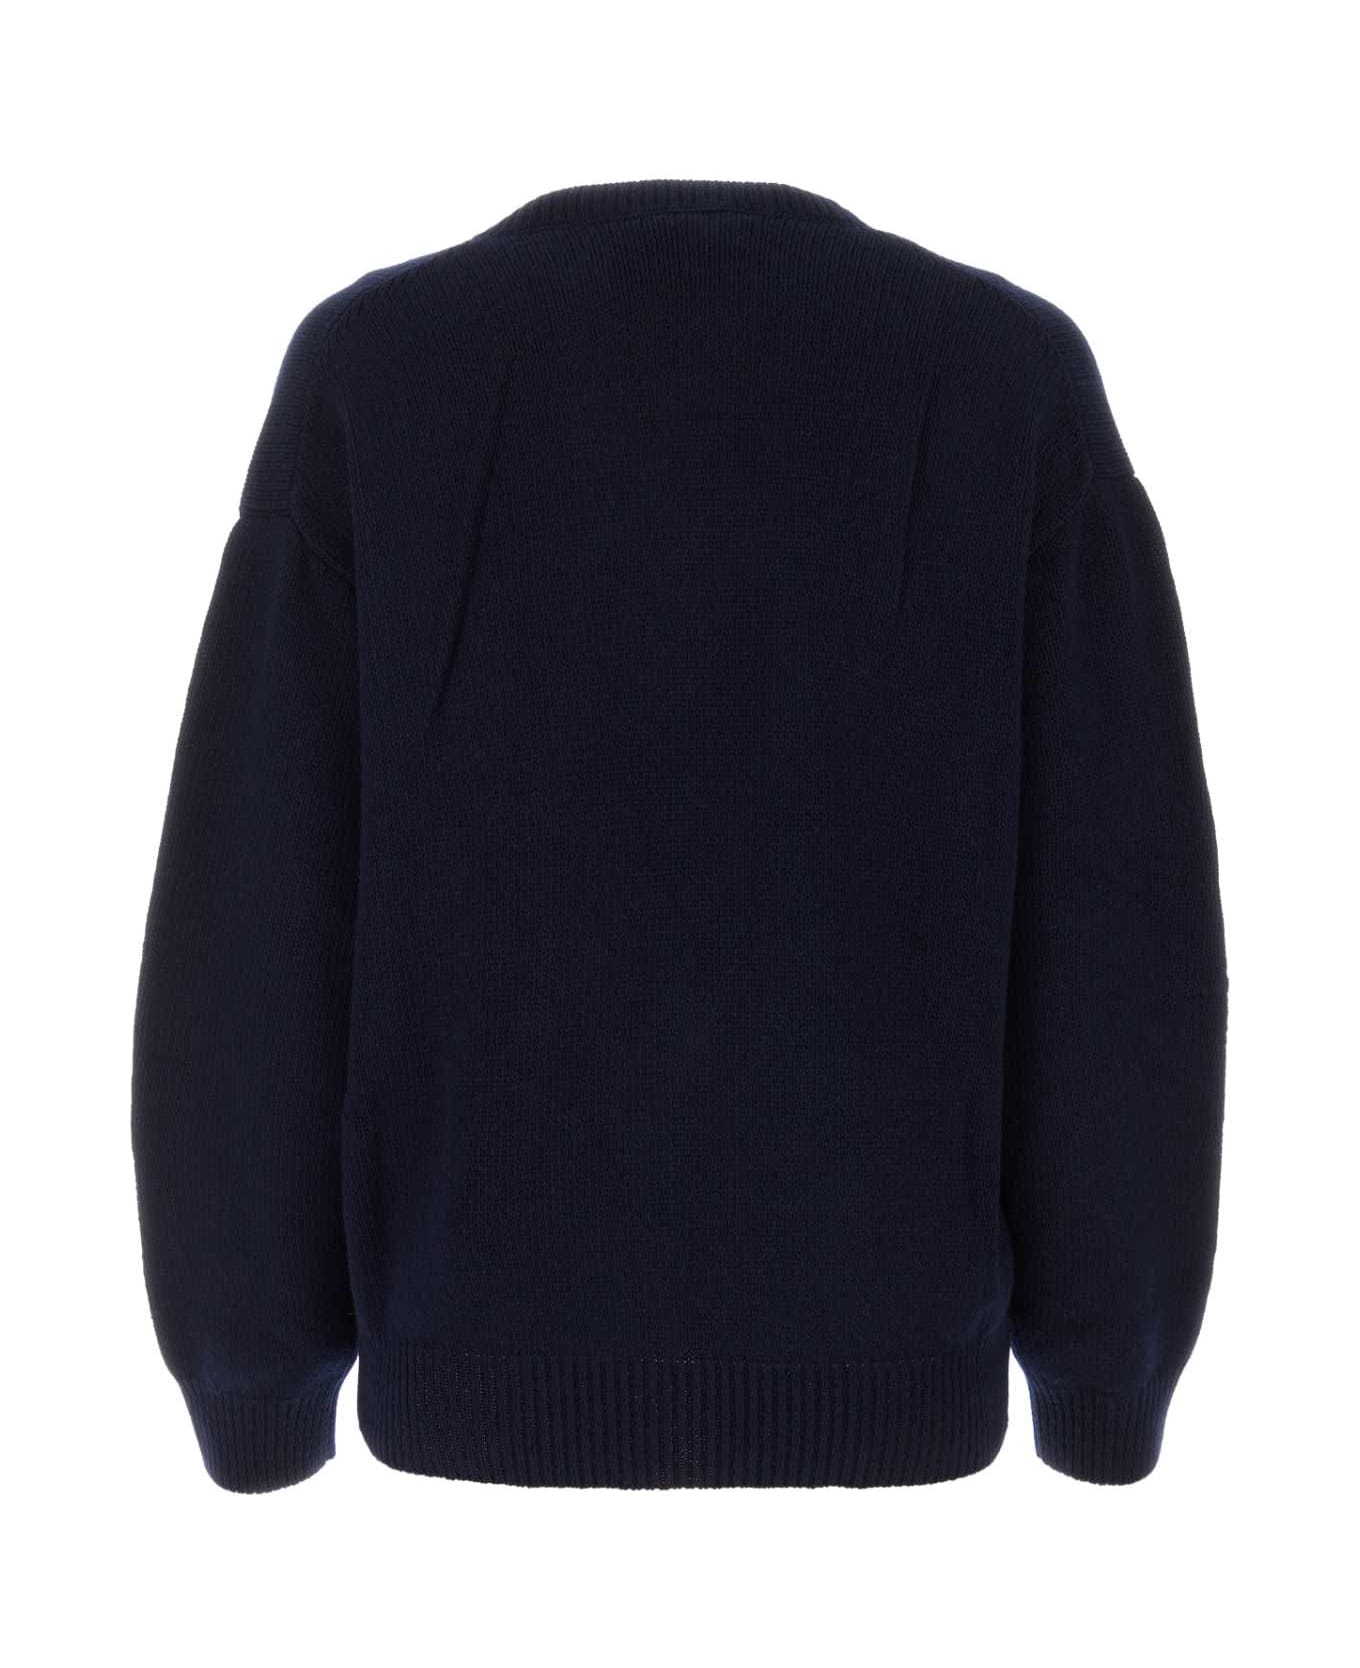 Prada Dark Blue Wool Blend Sweater - NAVY